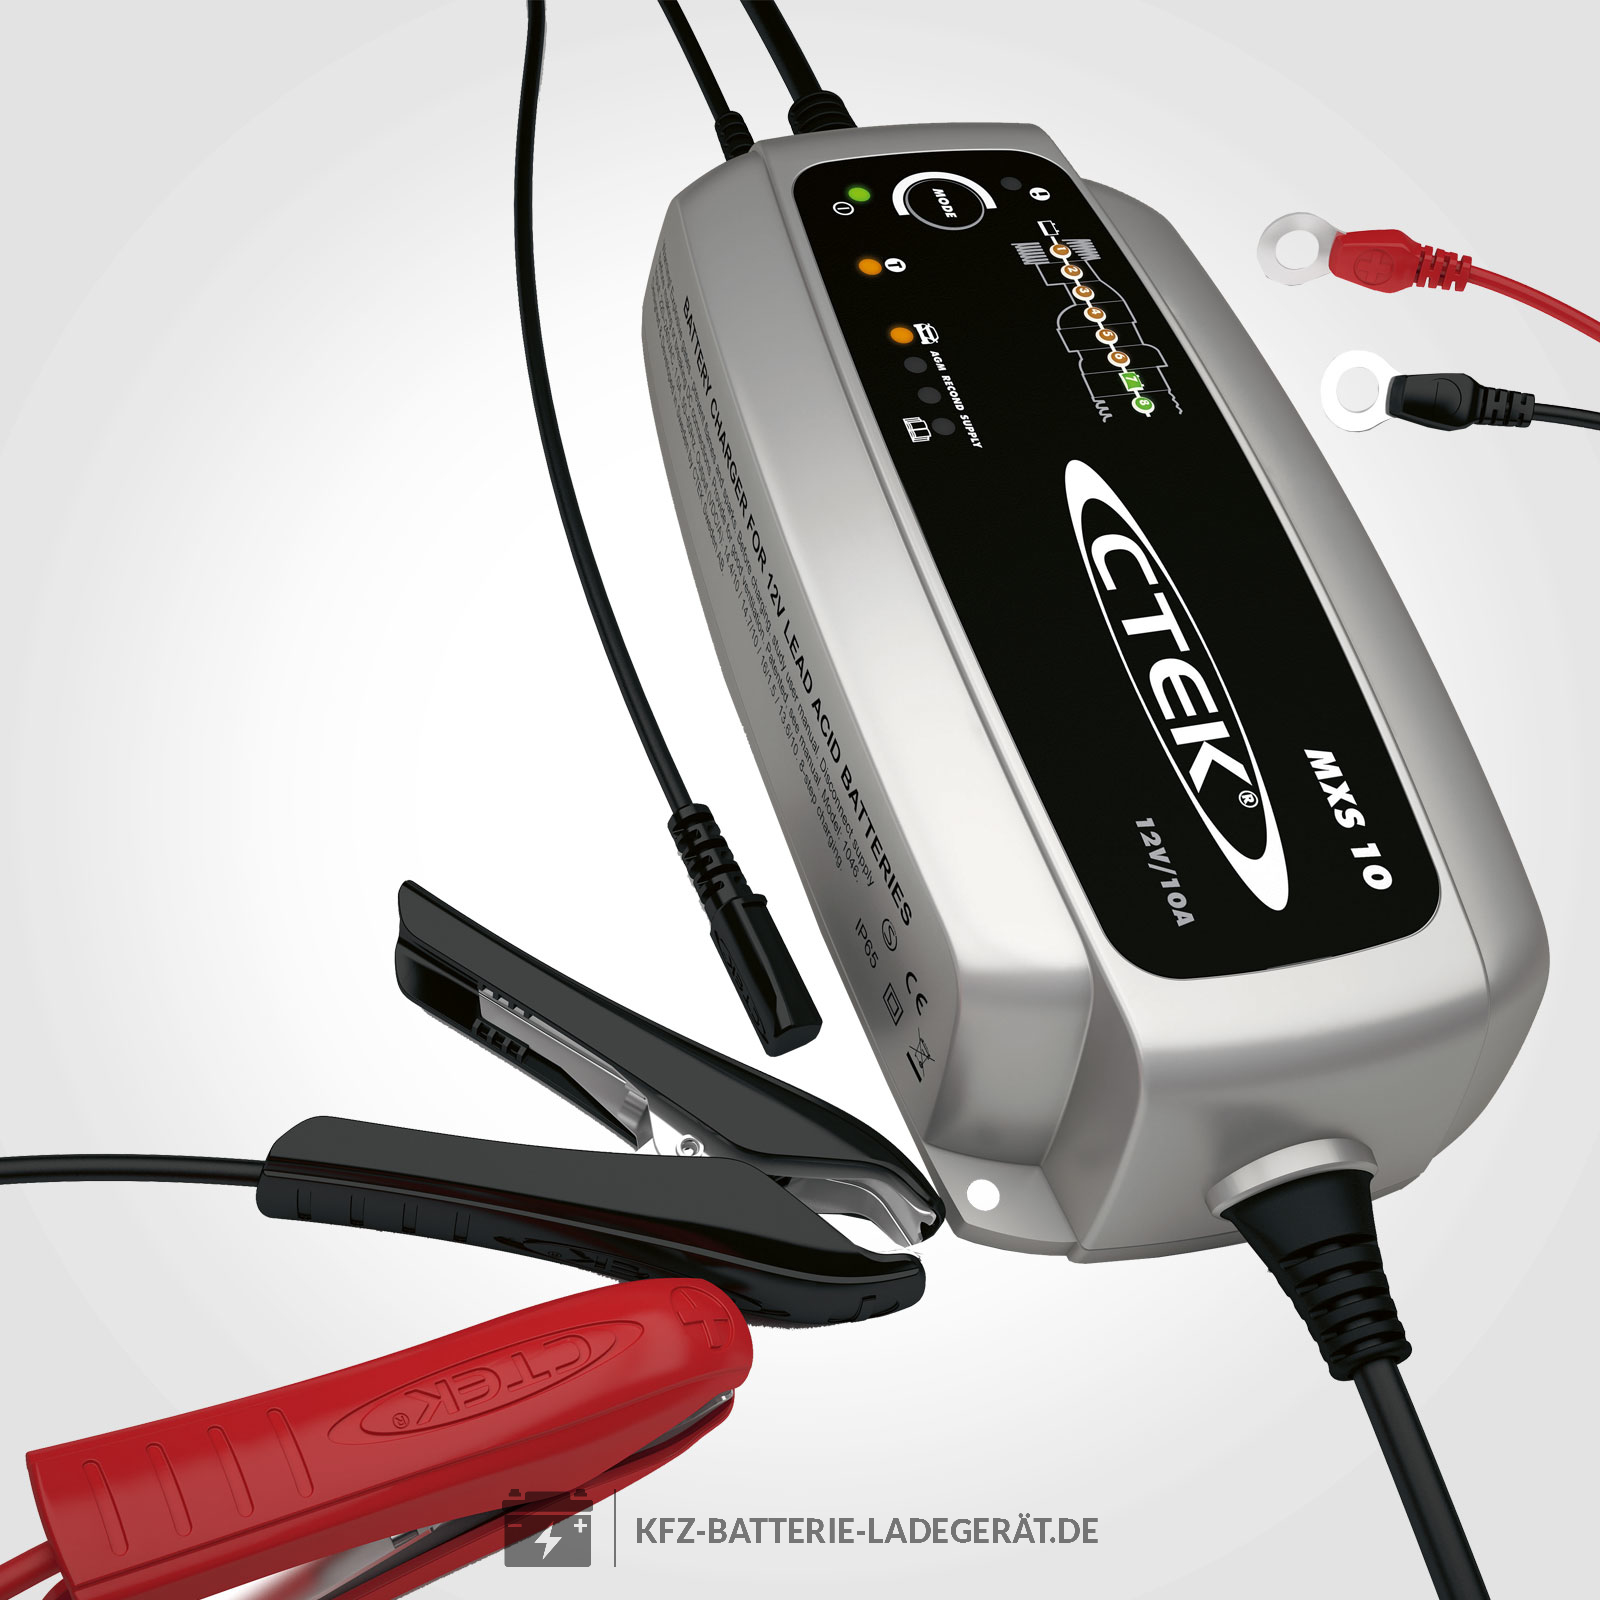 CTEK MXS10 Ladegerät für 12 Volt Batterien - CTEK Batterie Ladegeräte